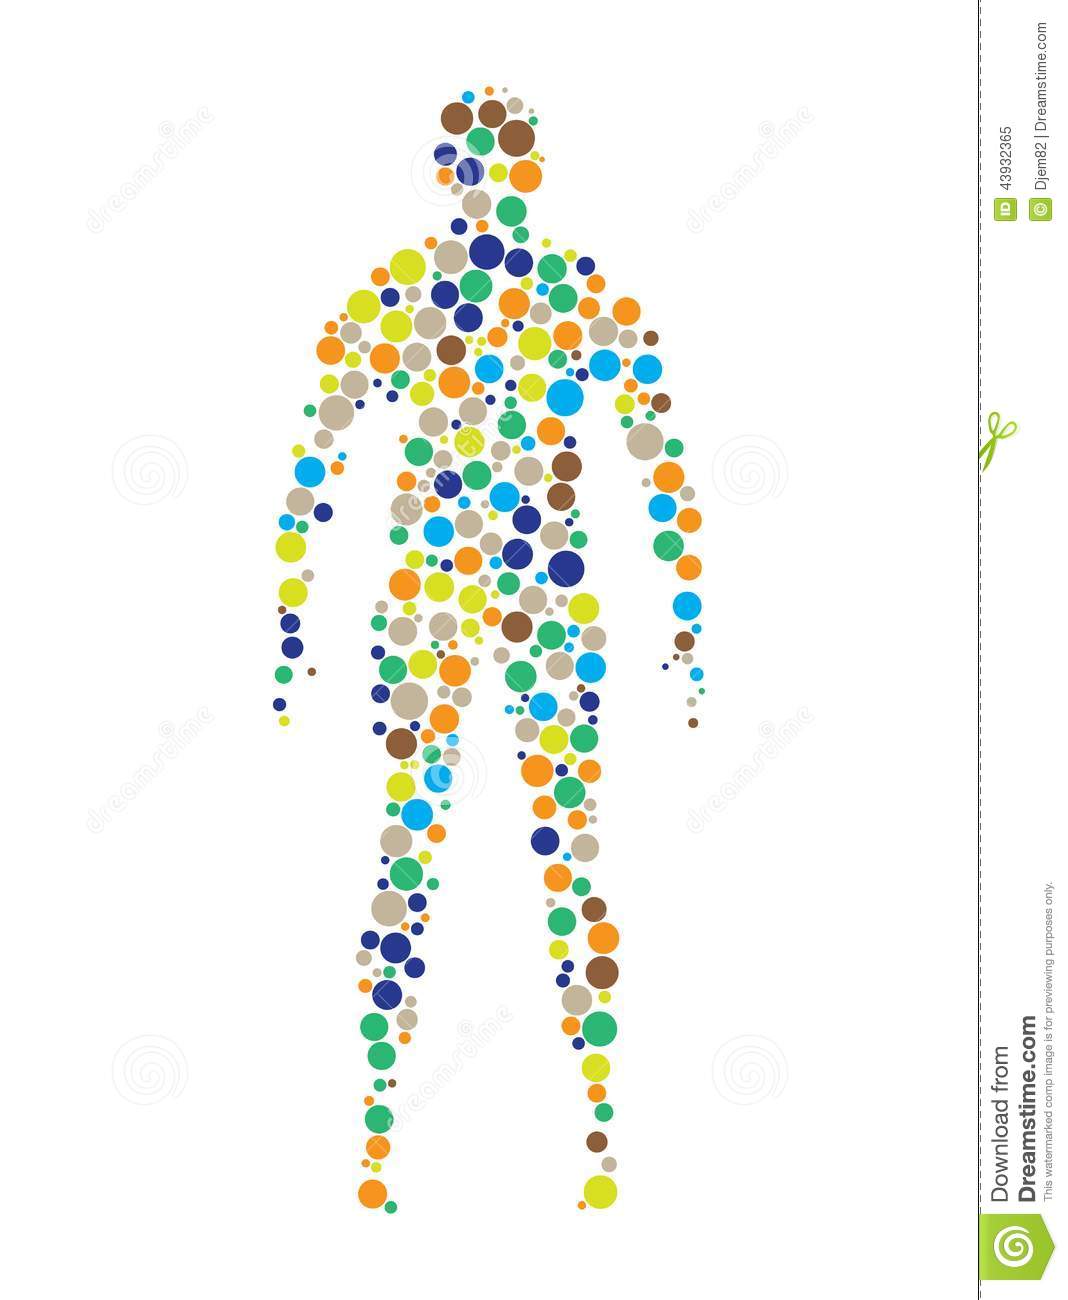 Human Body Outline Illustration